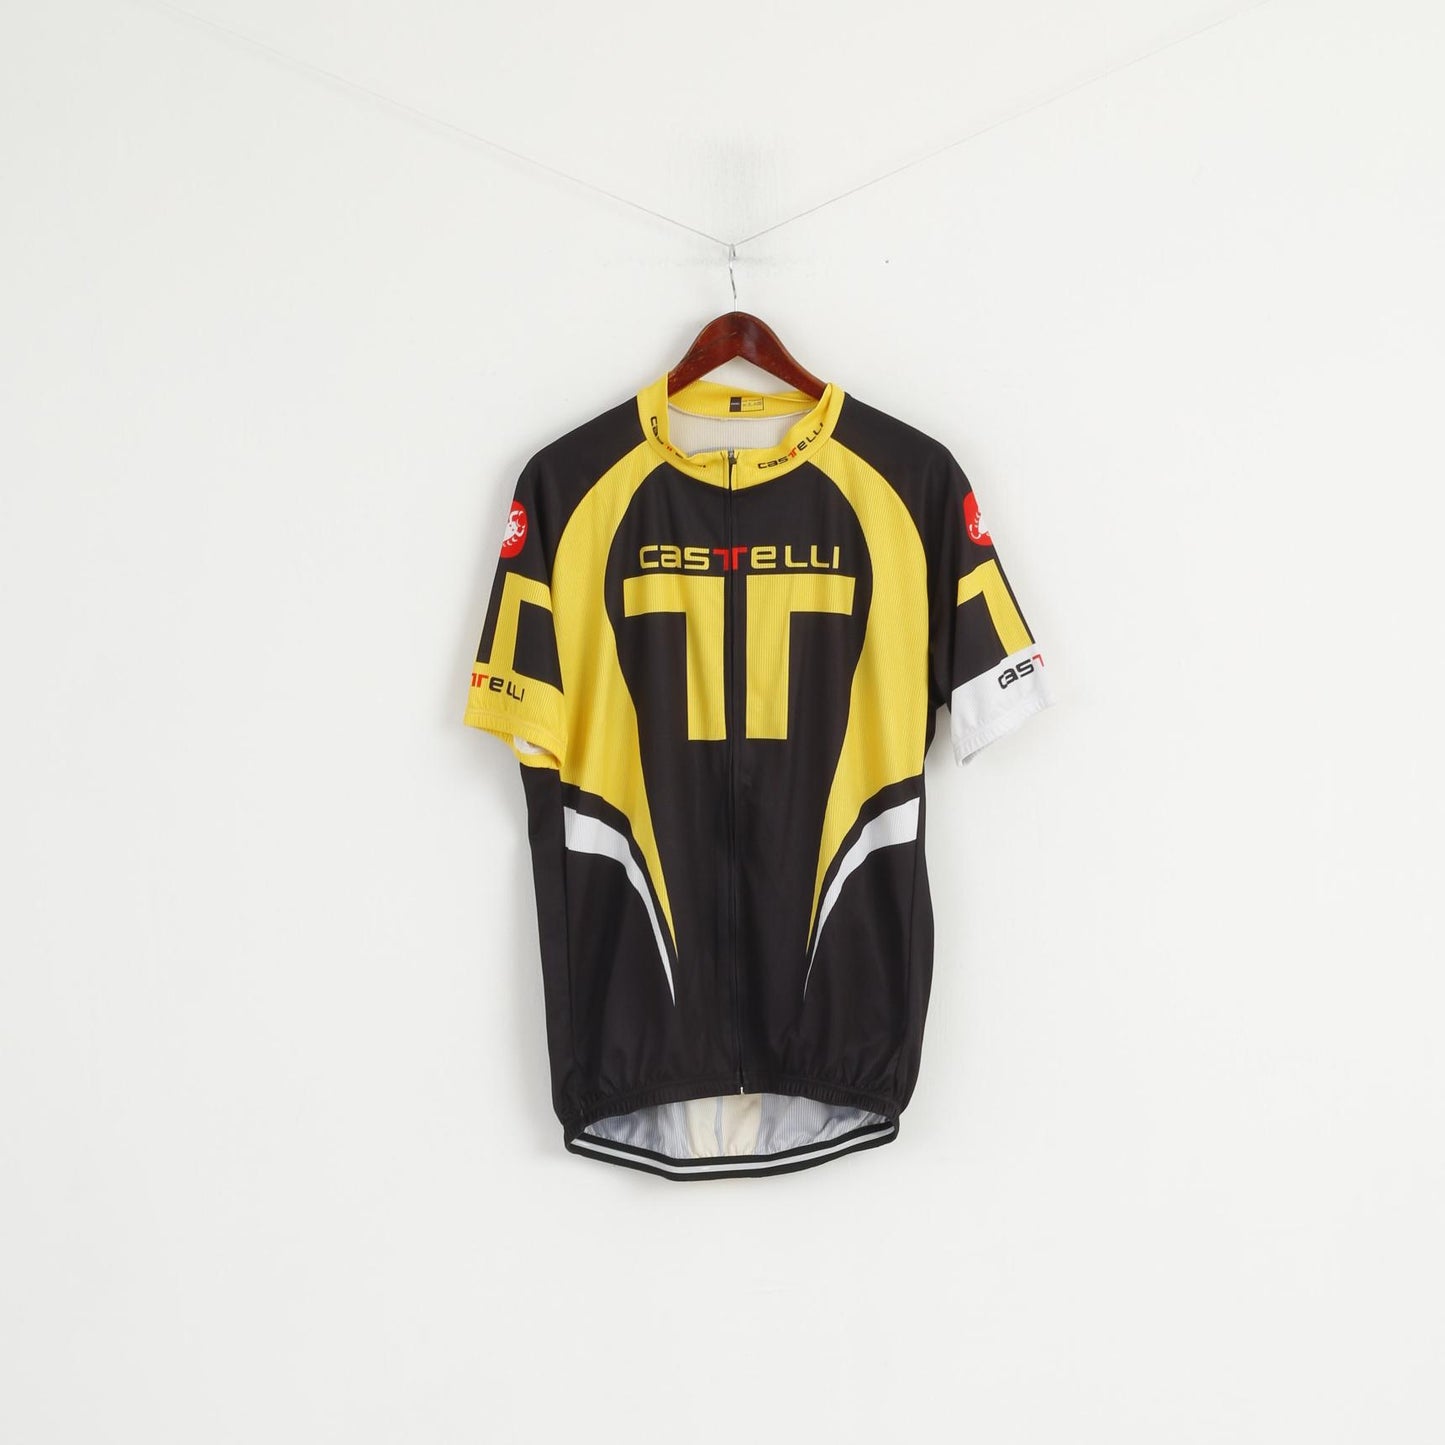 Castelli Hommes 4XL (XXL) Chemise de Cyclisme Jaune Noir Race Bike Full Zipper Jersey Top